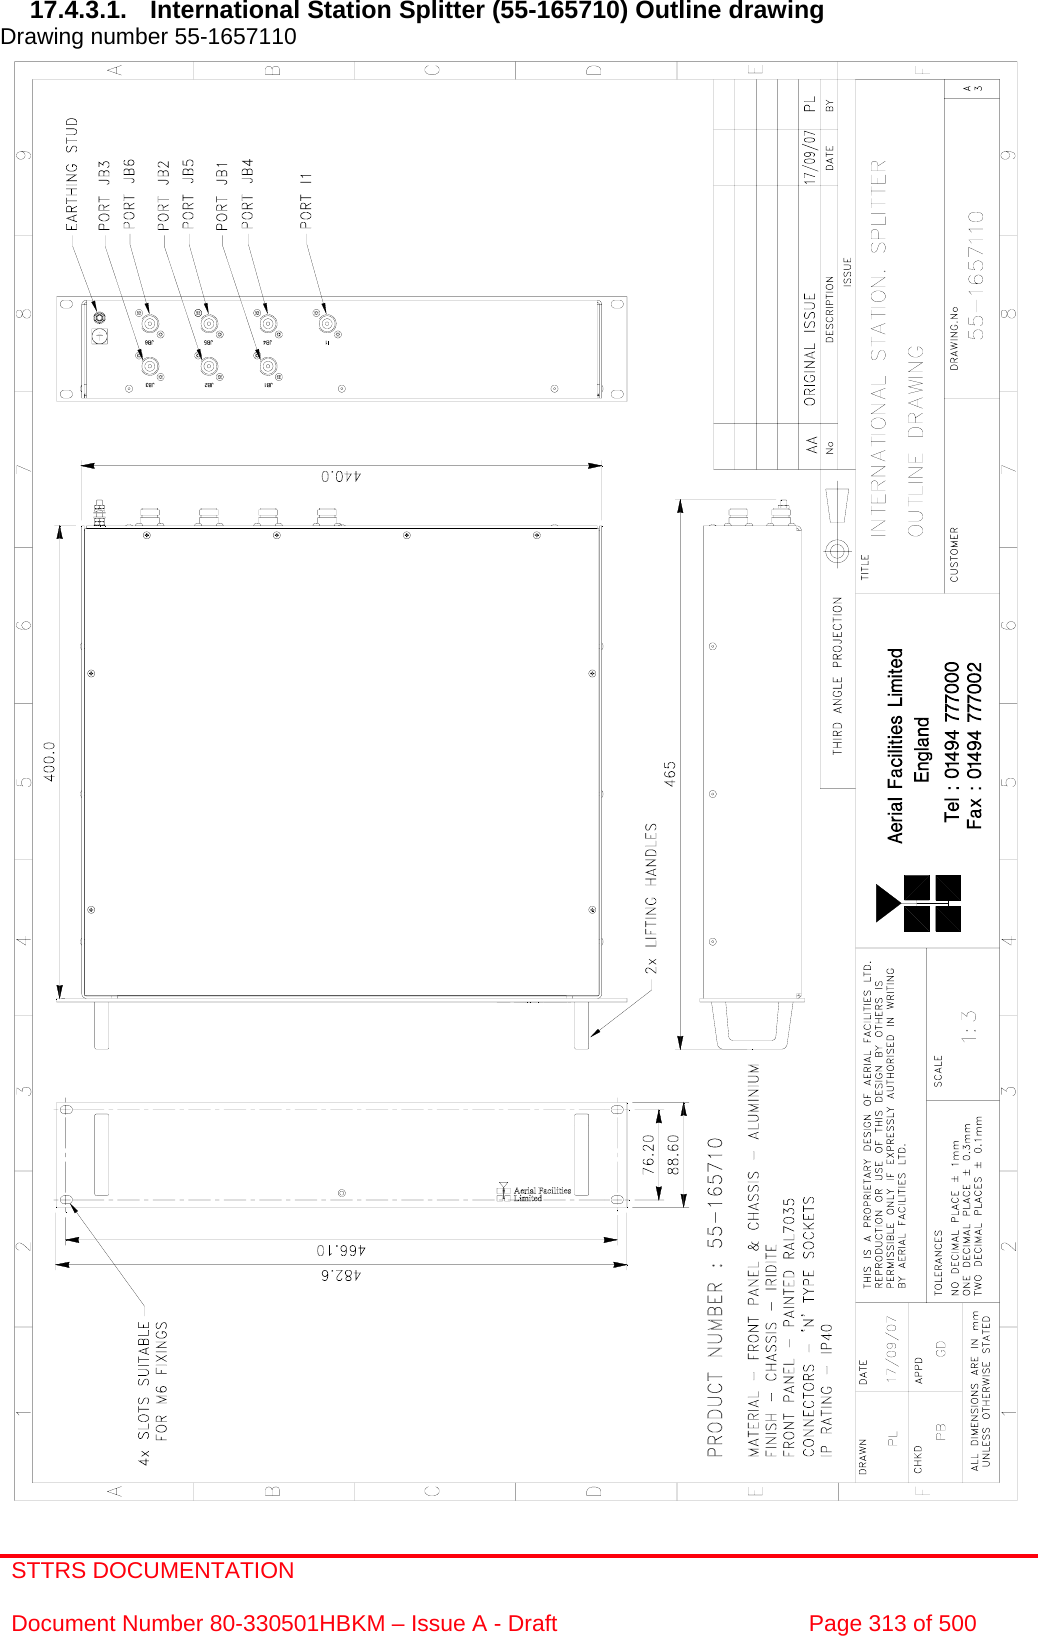 STTRS DOCUMENTATION  Document Number 80-330501HBKM – Issue A - Draft  Page 313 of 500   17.4.3.1. International Station Splitter (55-165710) Outline drawing Drawing number 55-1657110                                                        